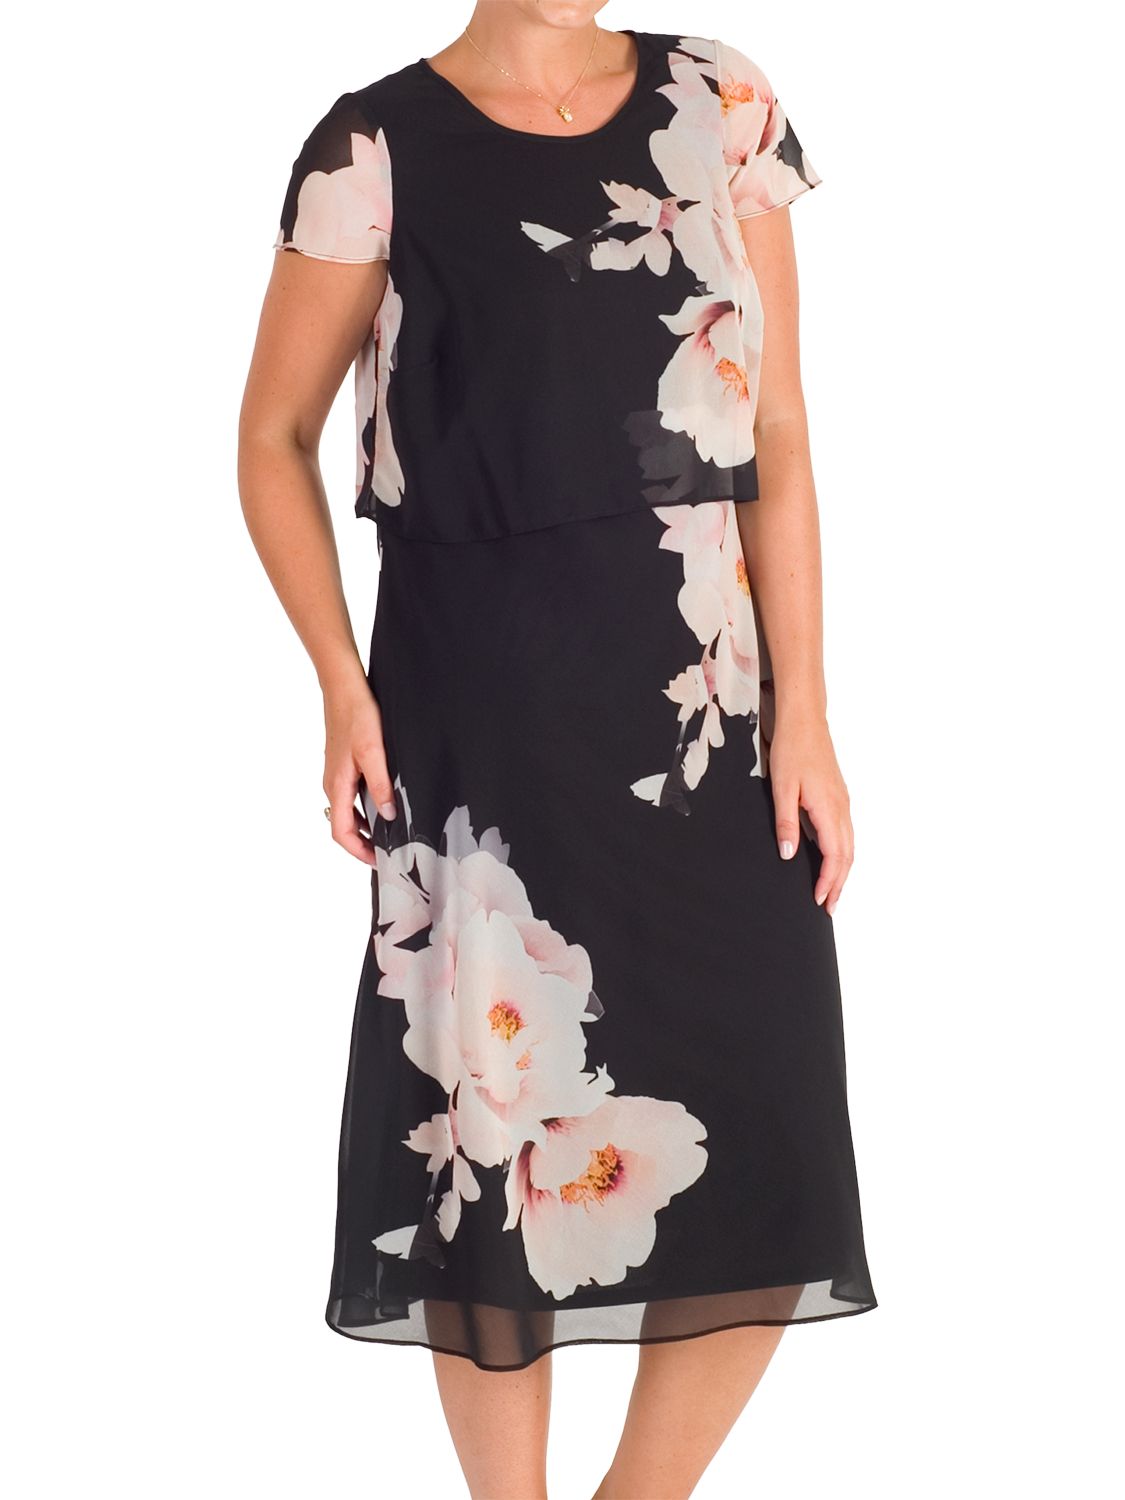 Chesca Floral Print Layered Chiffon Dress, Black/Blush